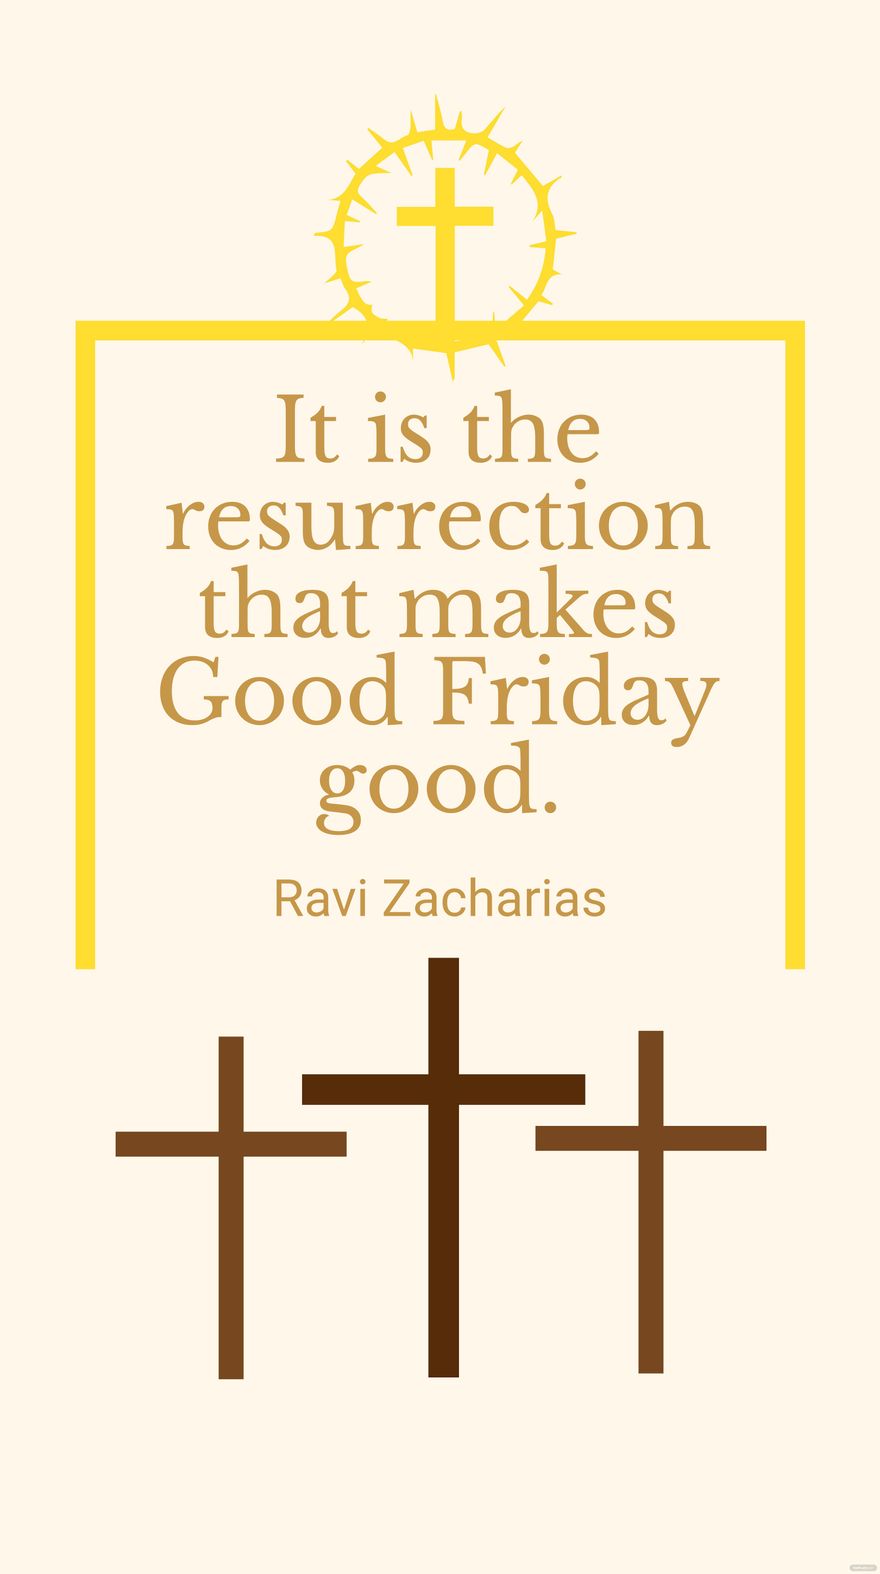 Ravi Zacharias - It is the resurrection that makes Good Friday good.